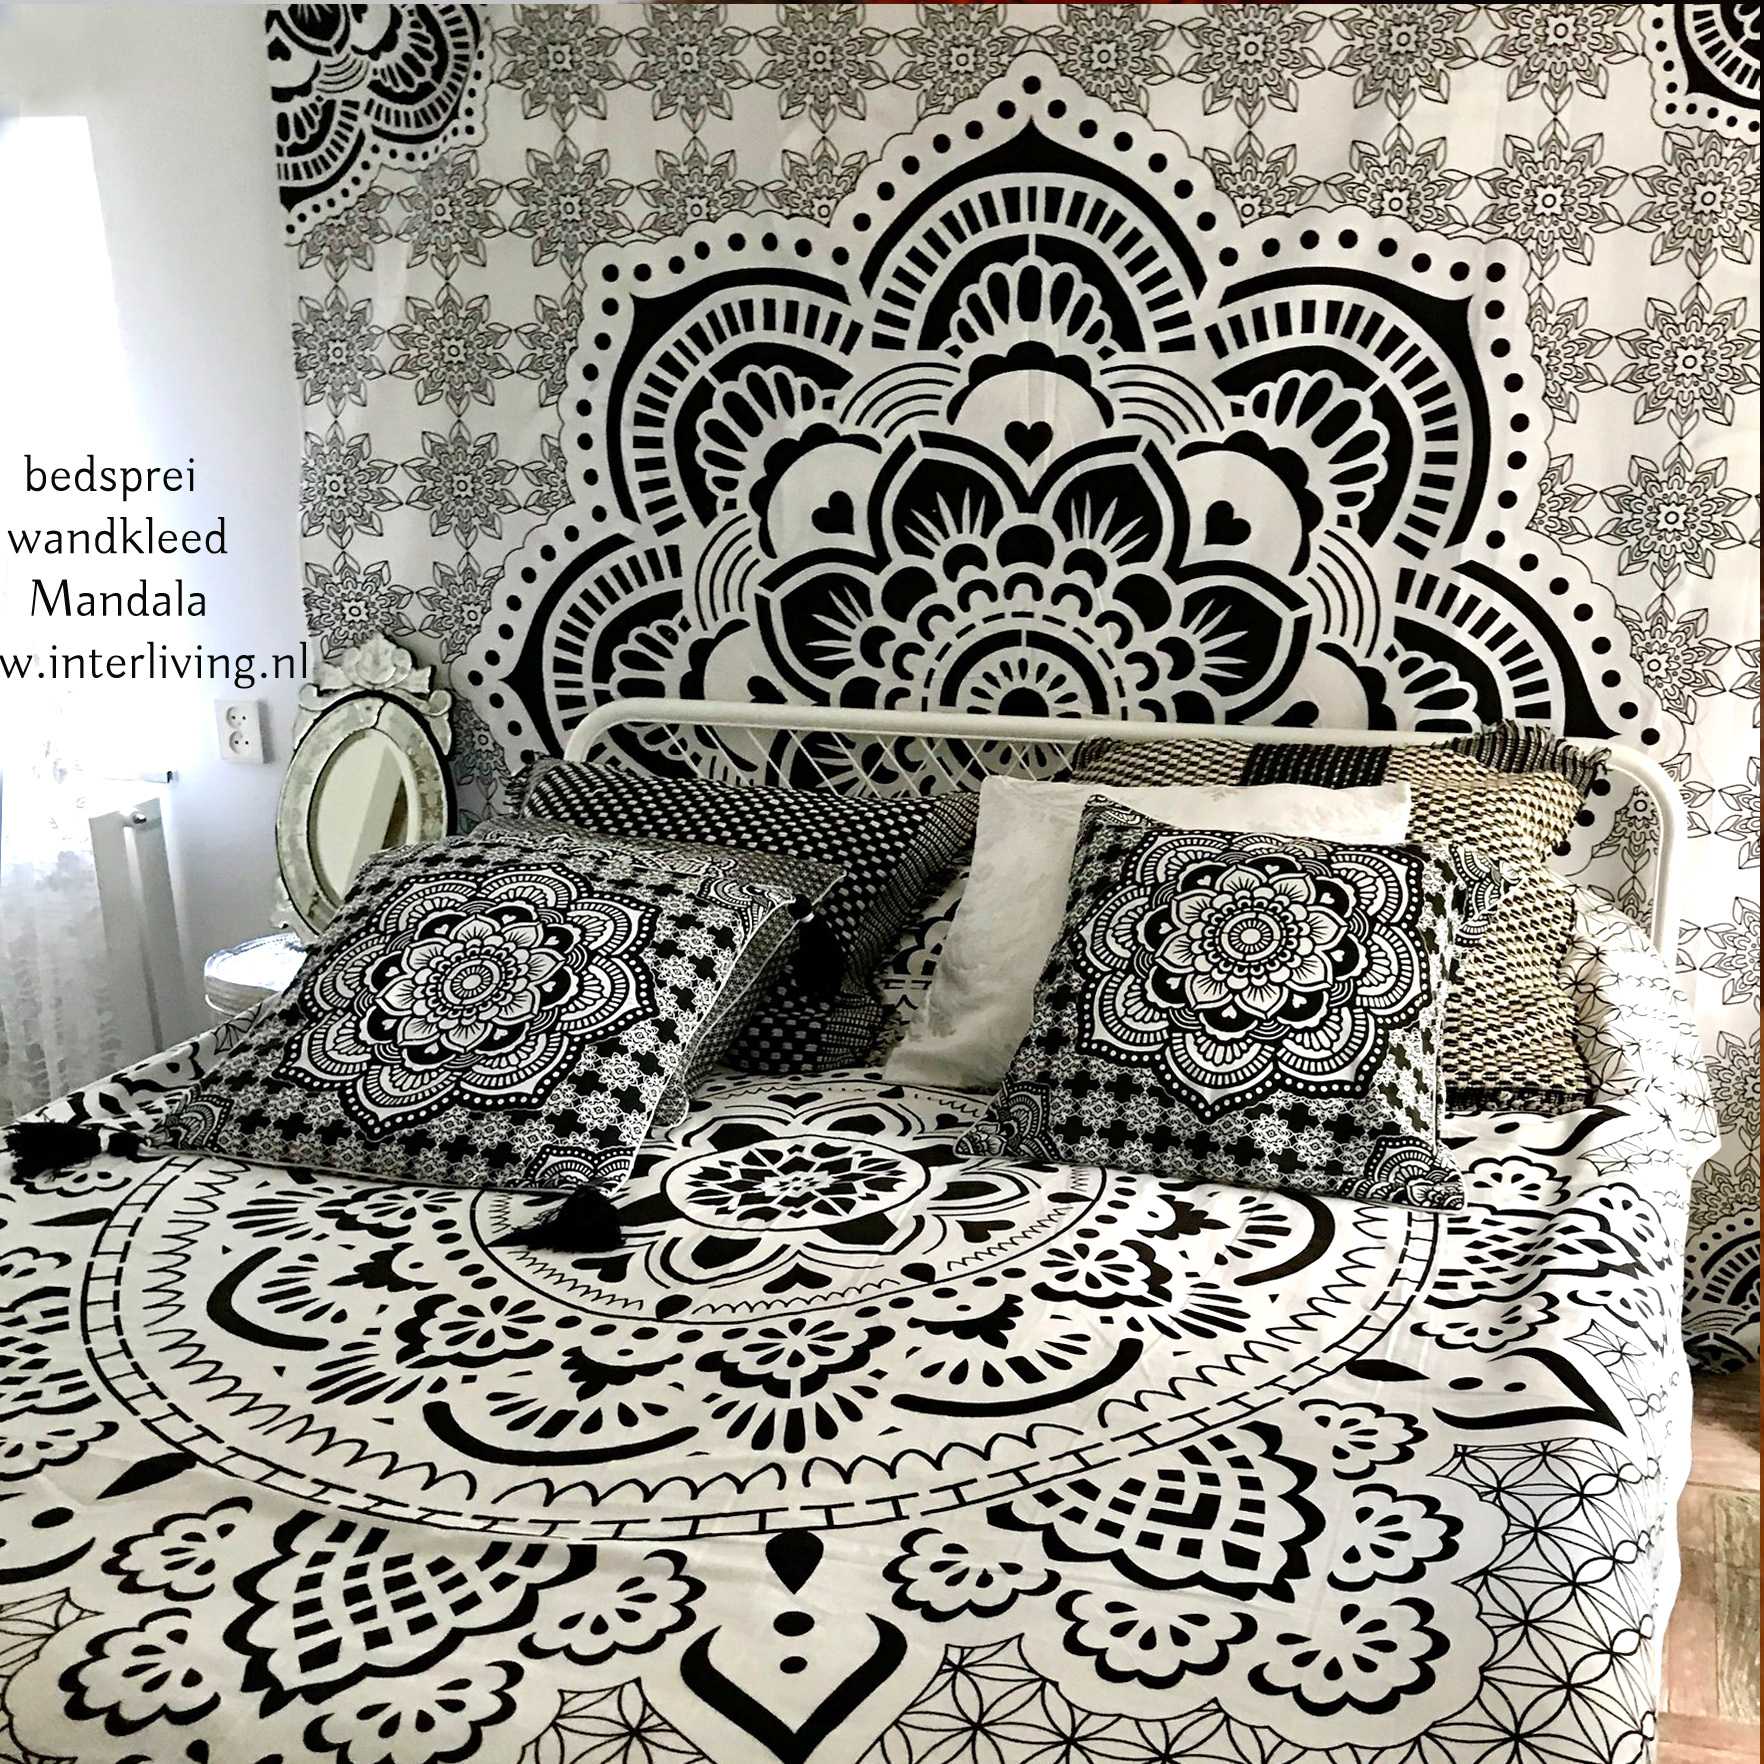 Briljant hardop genade Bedsprei, muurdecoratie of tafellaken met Boho wit Mandala uit India